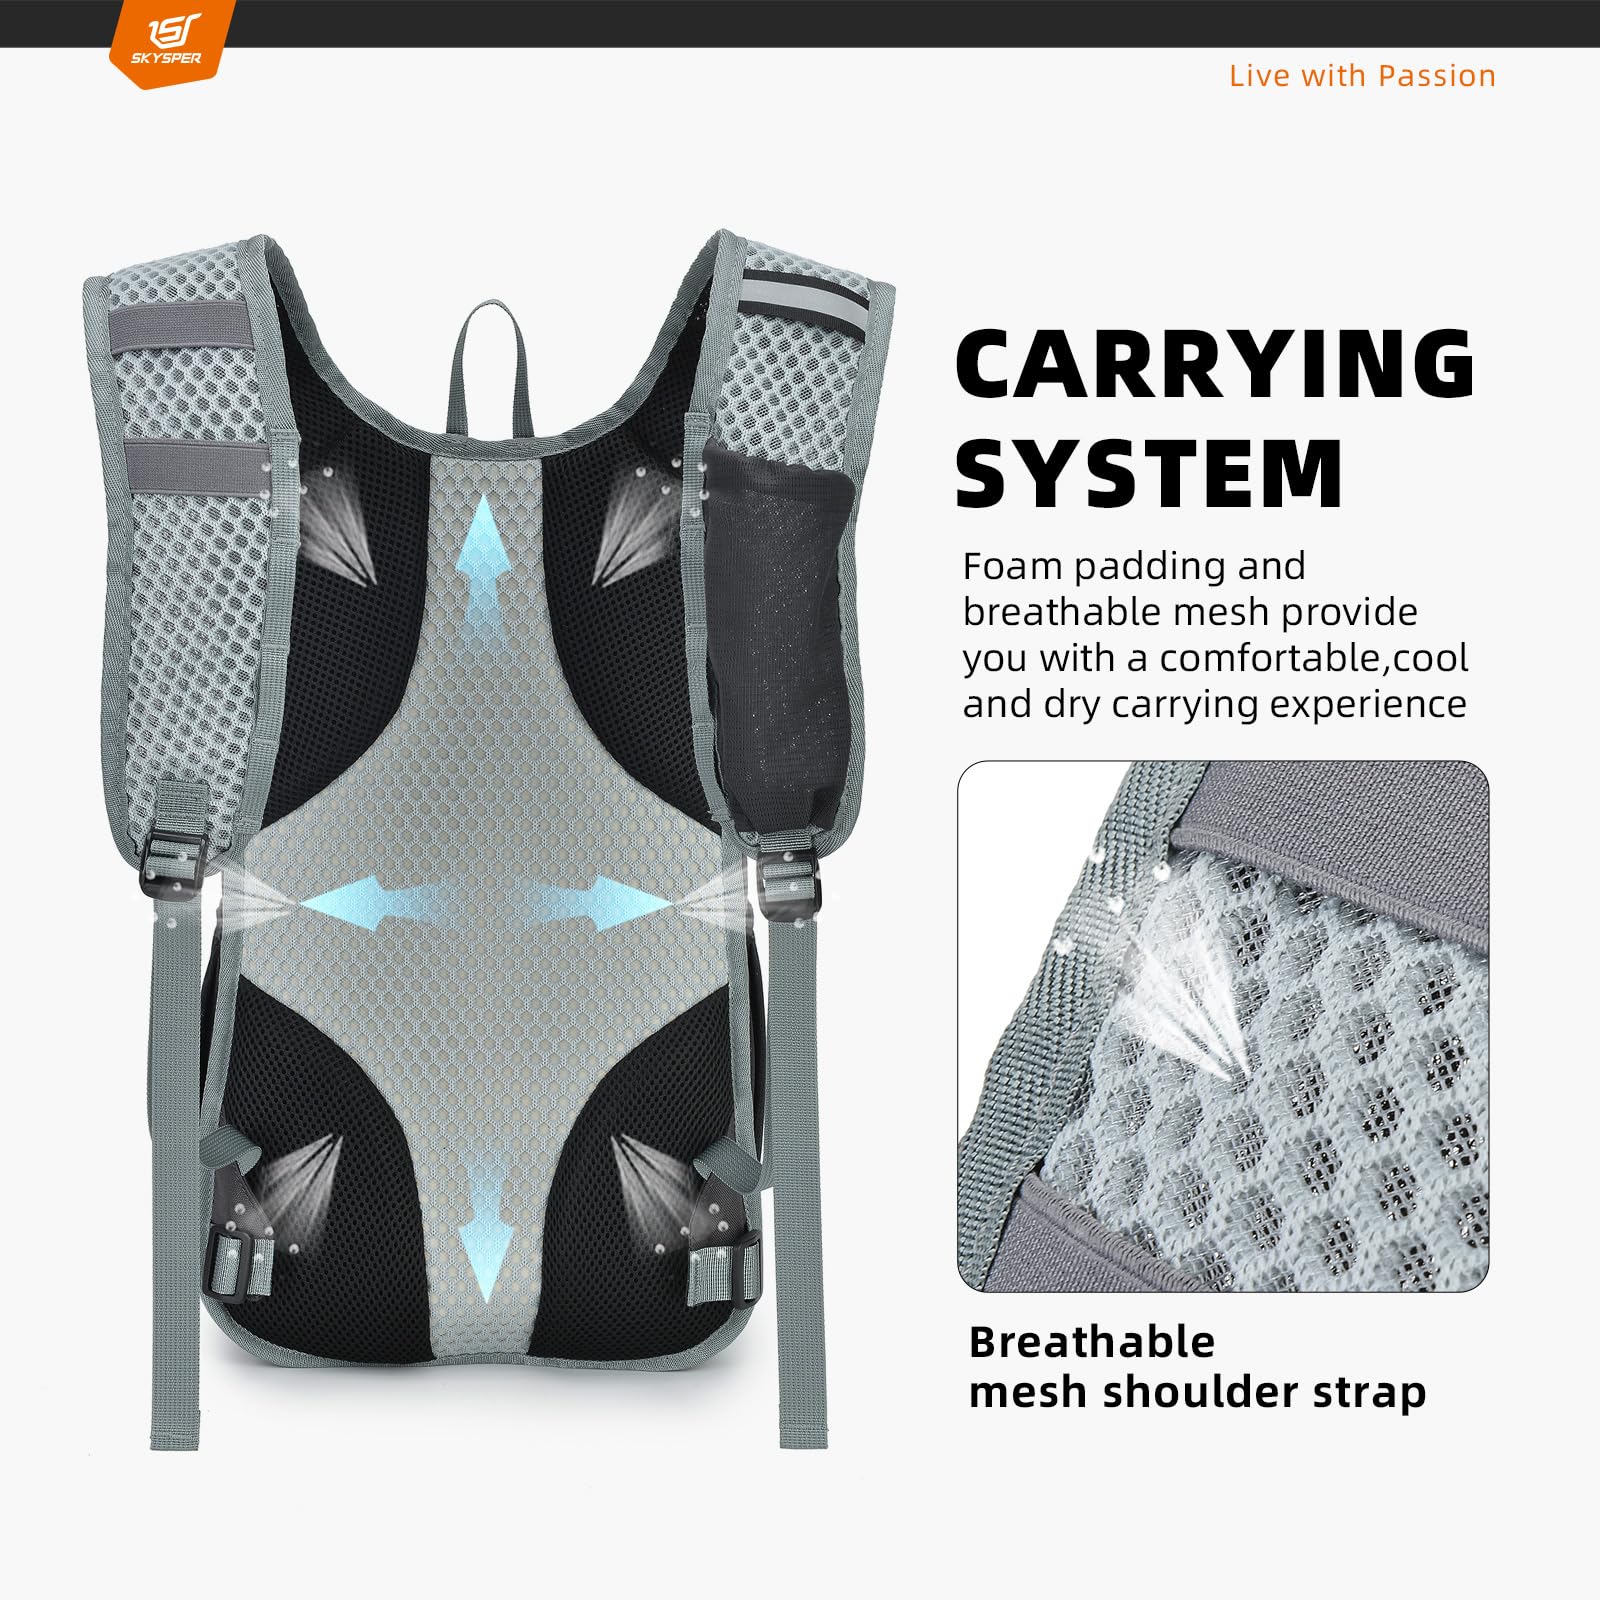 SKYSPER Small Hiking Backpack - 15L Travel Daypack Lightweight Bag Water  Resistant Hiking Backpacks for Women Men